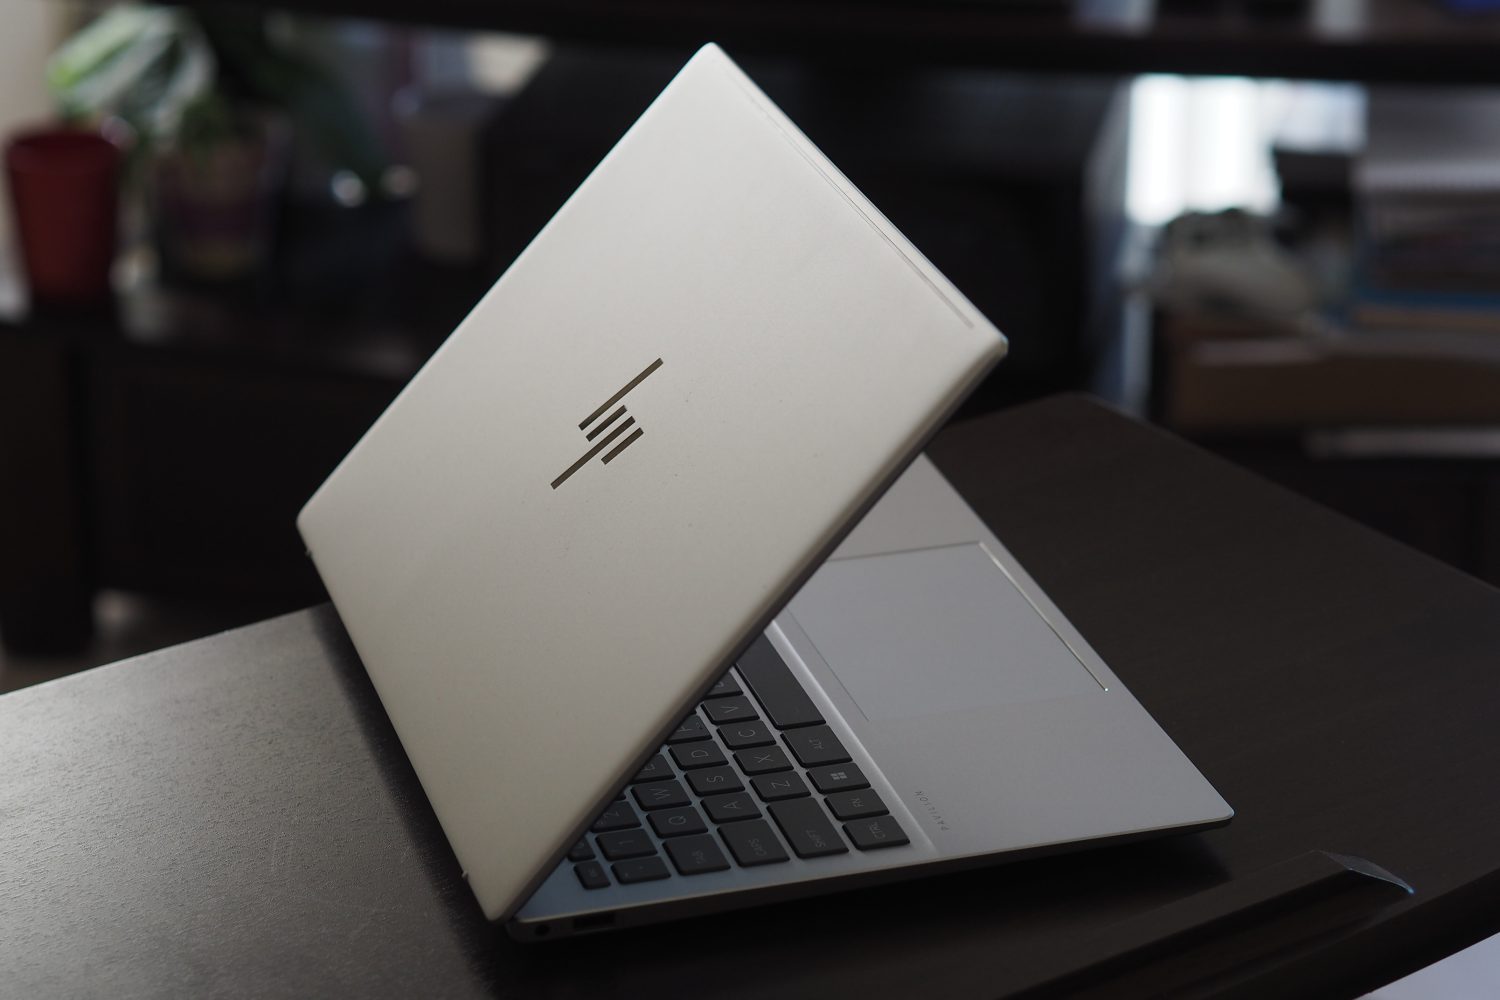 HP Envy против Pavilion: какая линейка ноутбуков лучше?